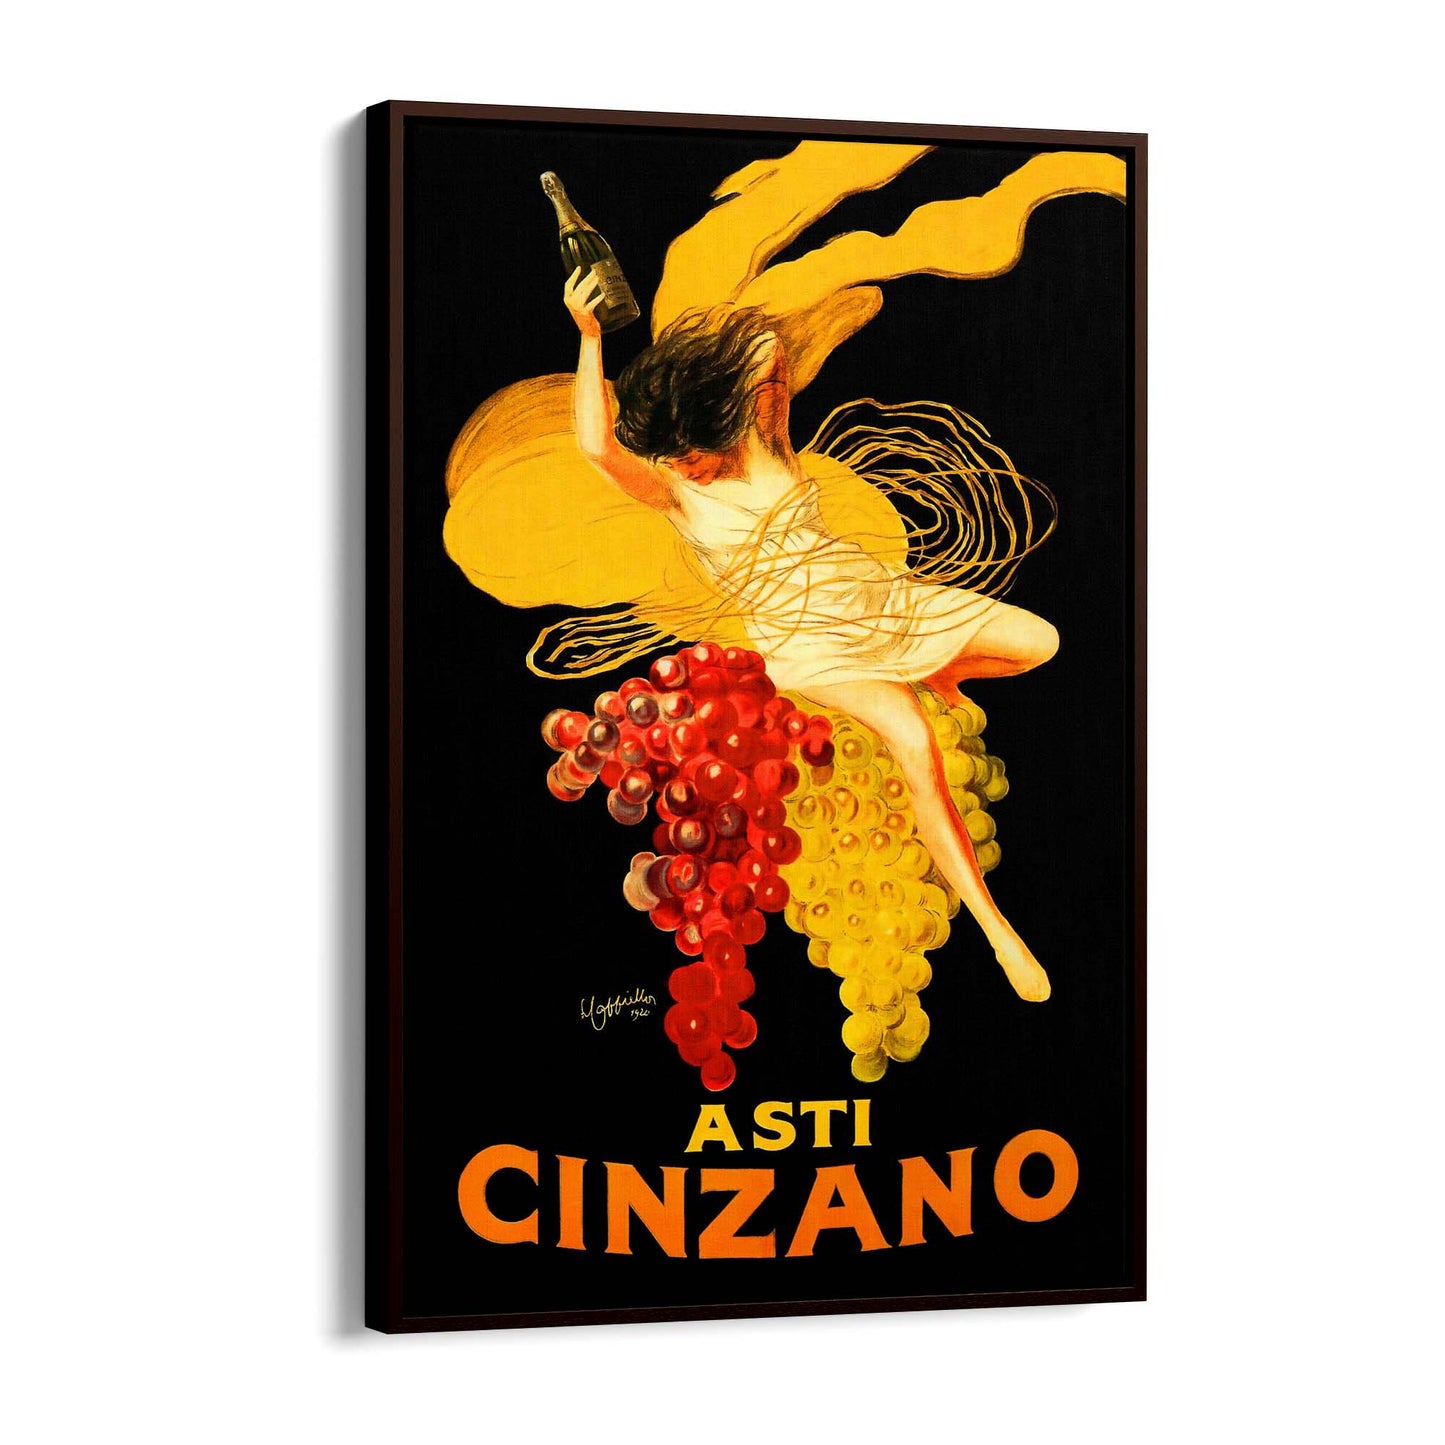 Asti Cinzano Vintage Advert Wall Art - The Affordable Art Company